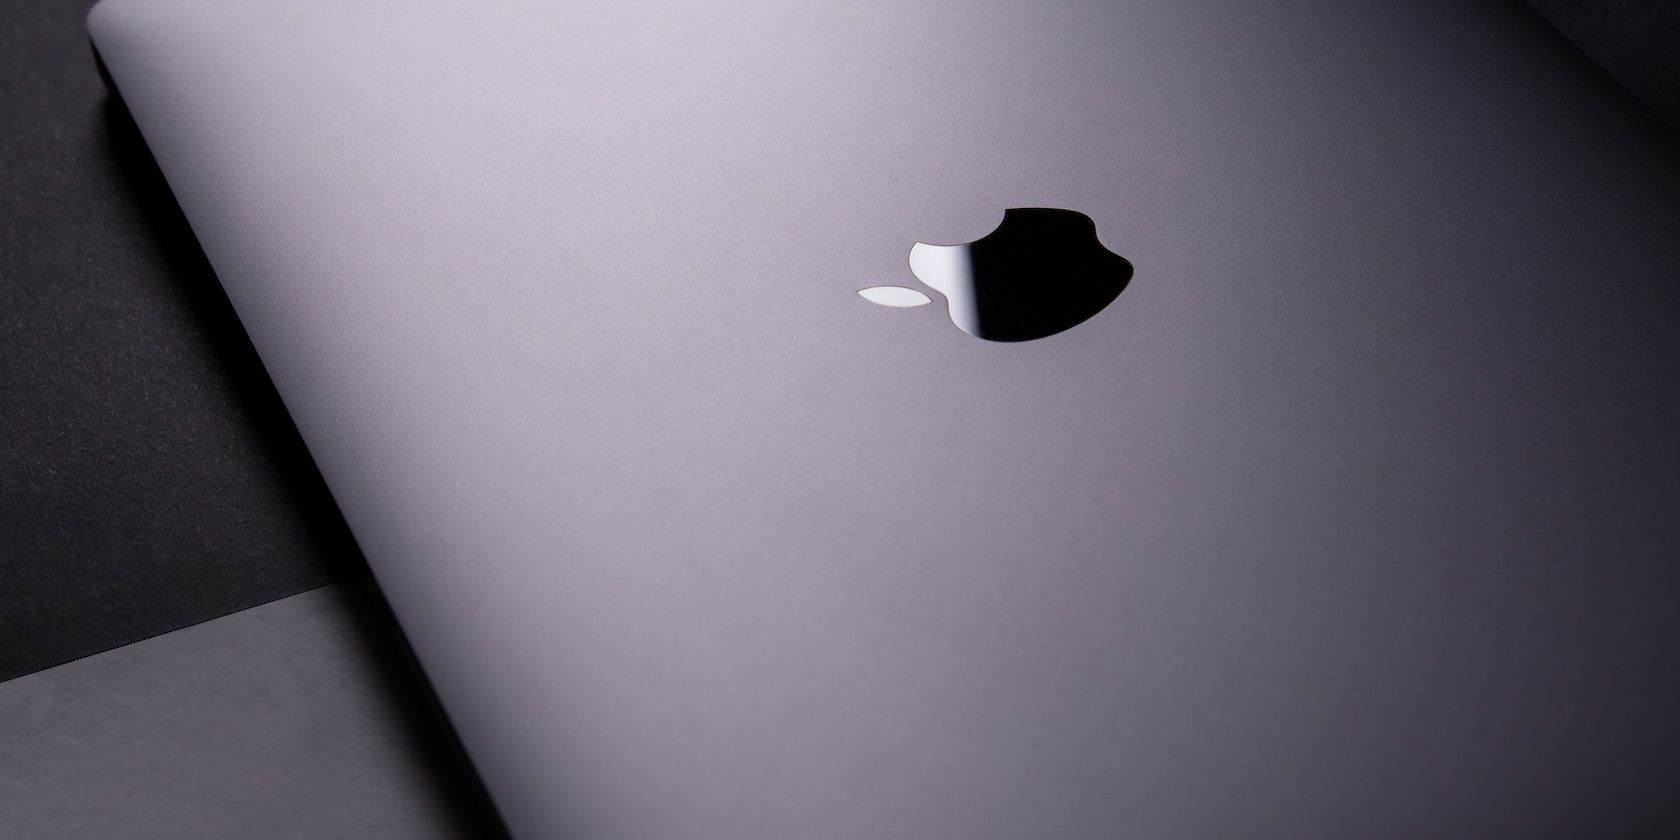 Close-Up Shot of a Macbook Pro Computer Laptop